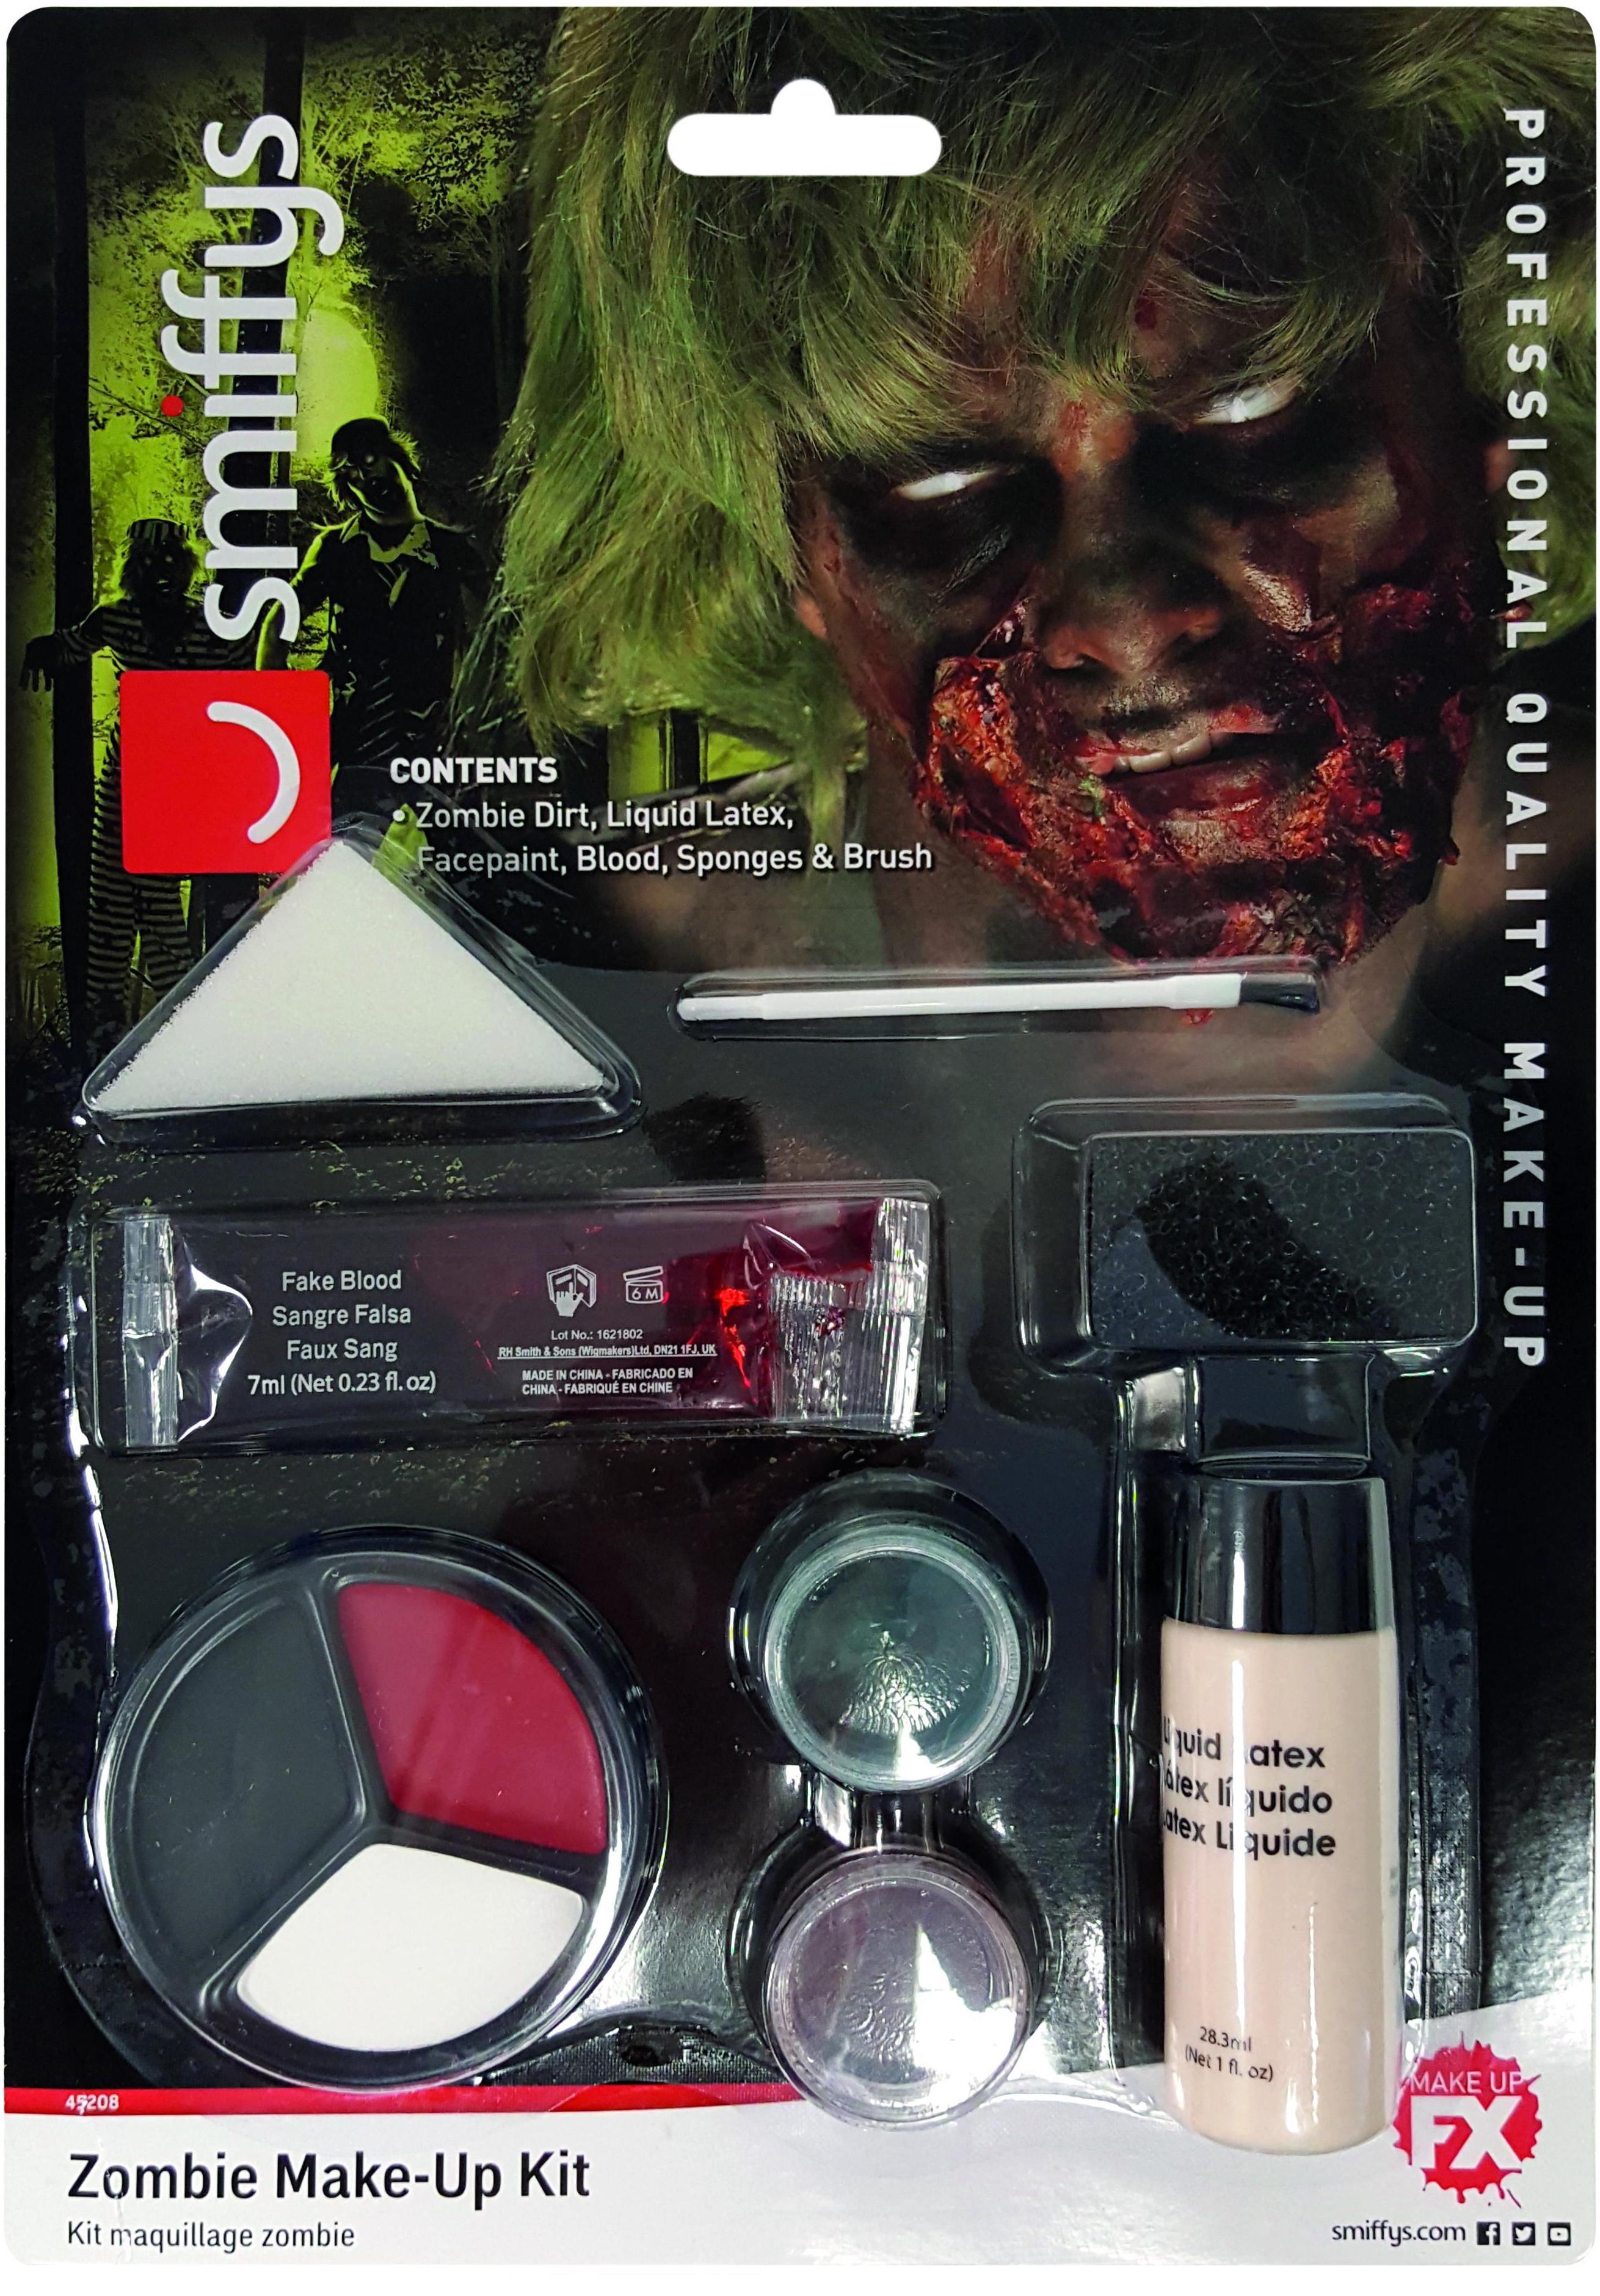 Zombie Make-Up Kit